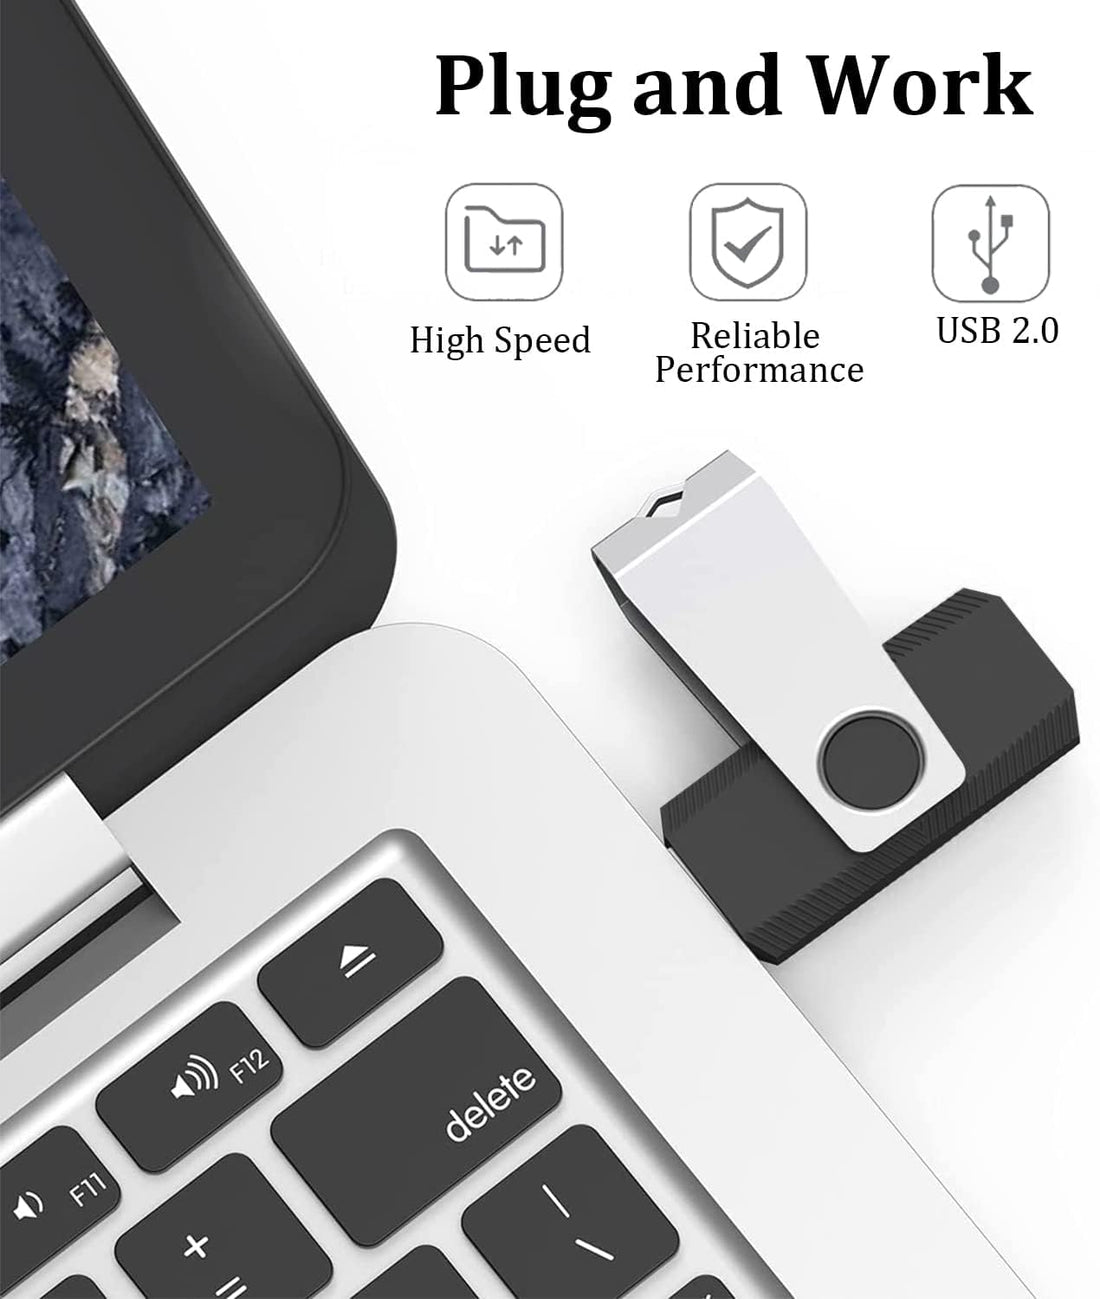 2GB Flash Drive Wooolken USB Flash Drive Thumb Drive Zip Drive USB 2.0 Memory Stick Jump Pen Drive for Portable Data Storage